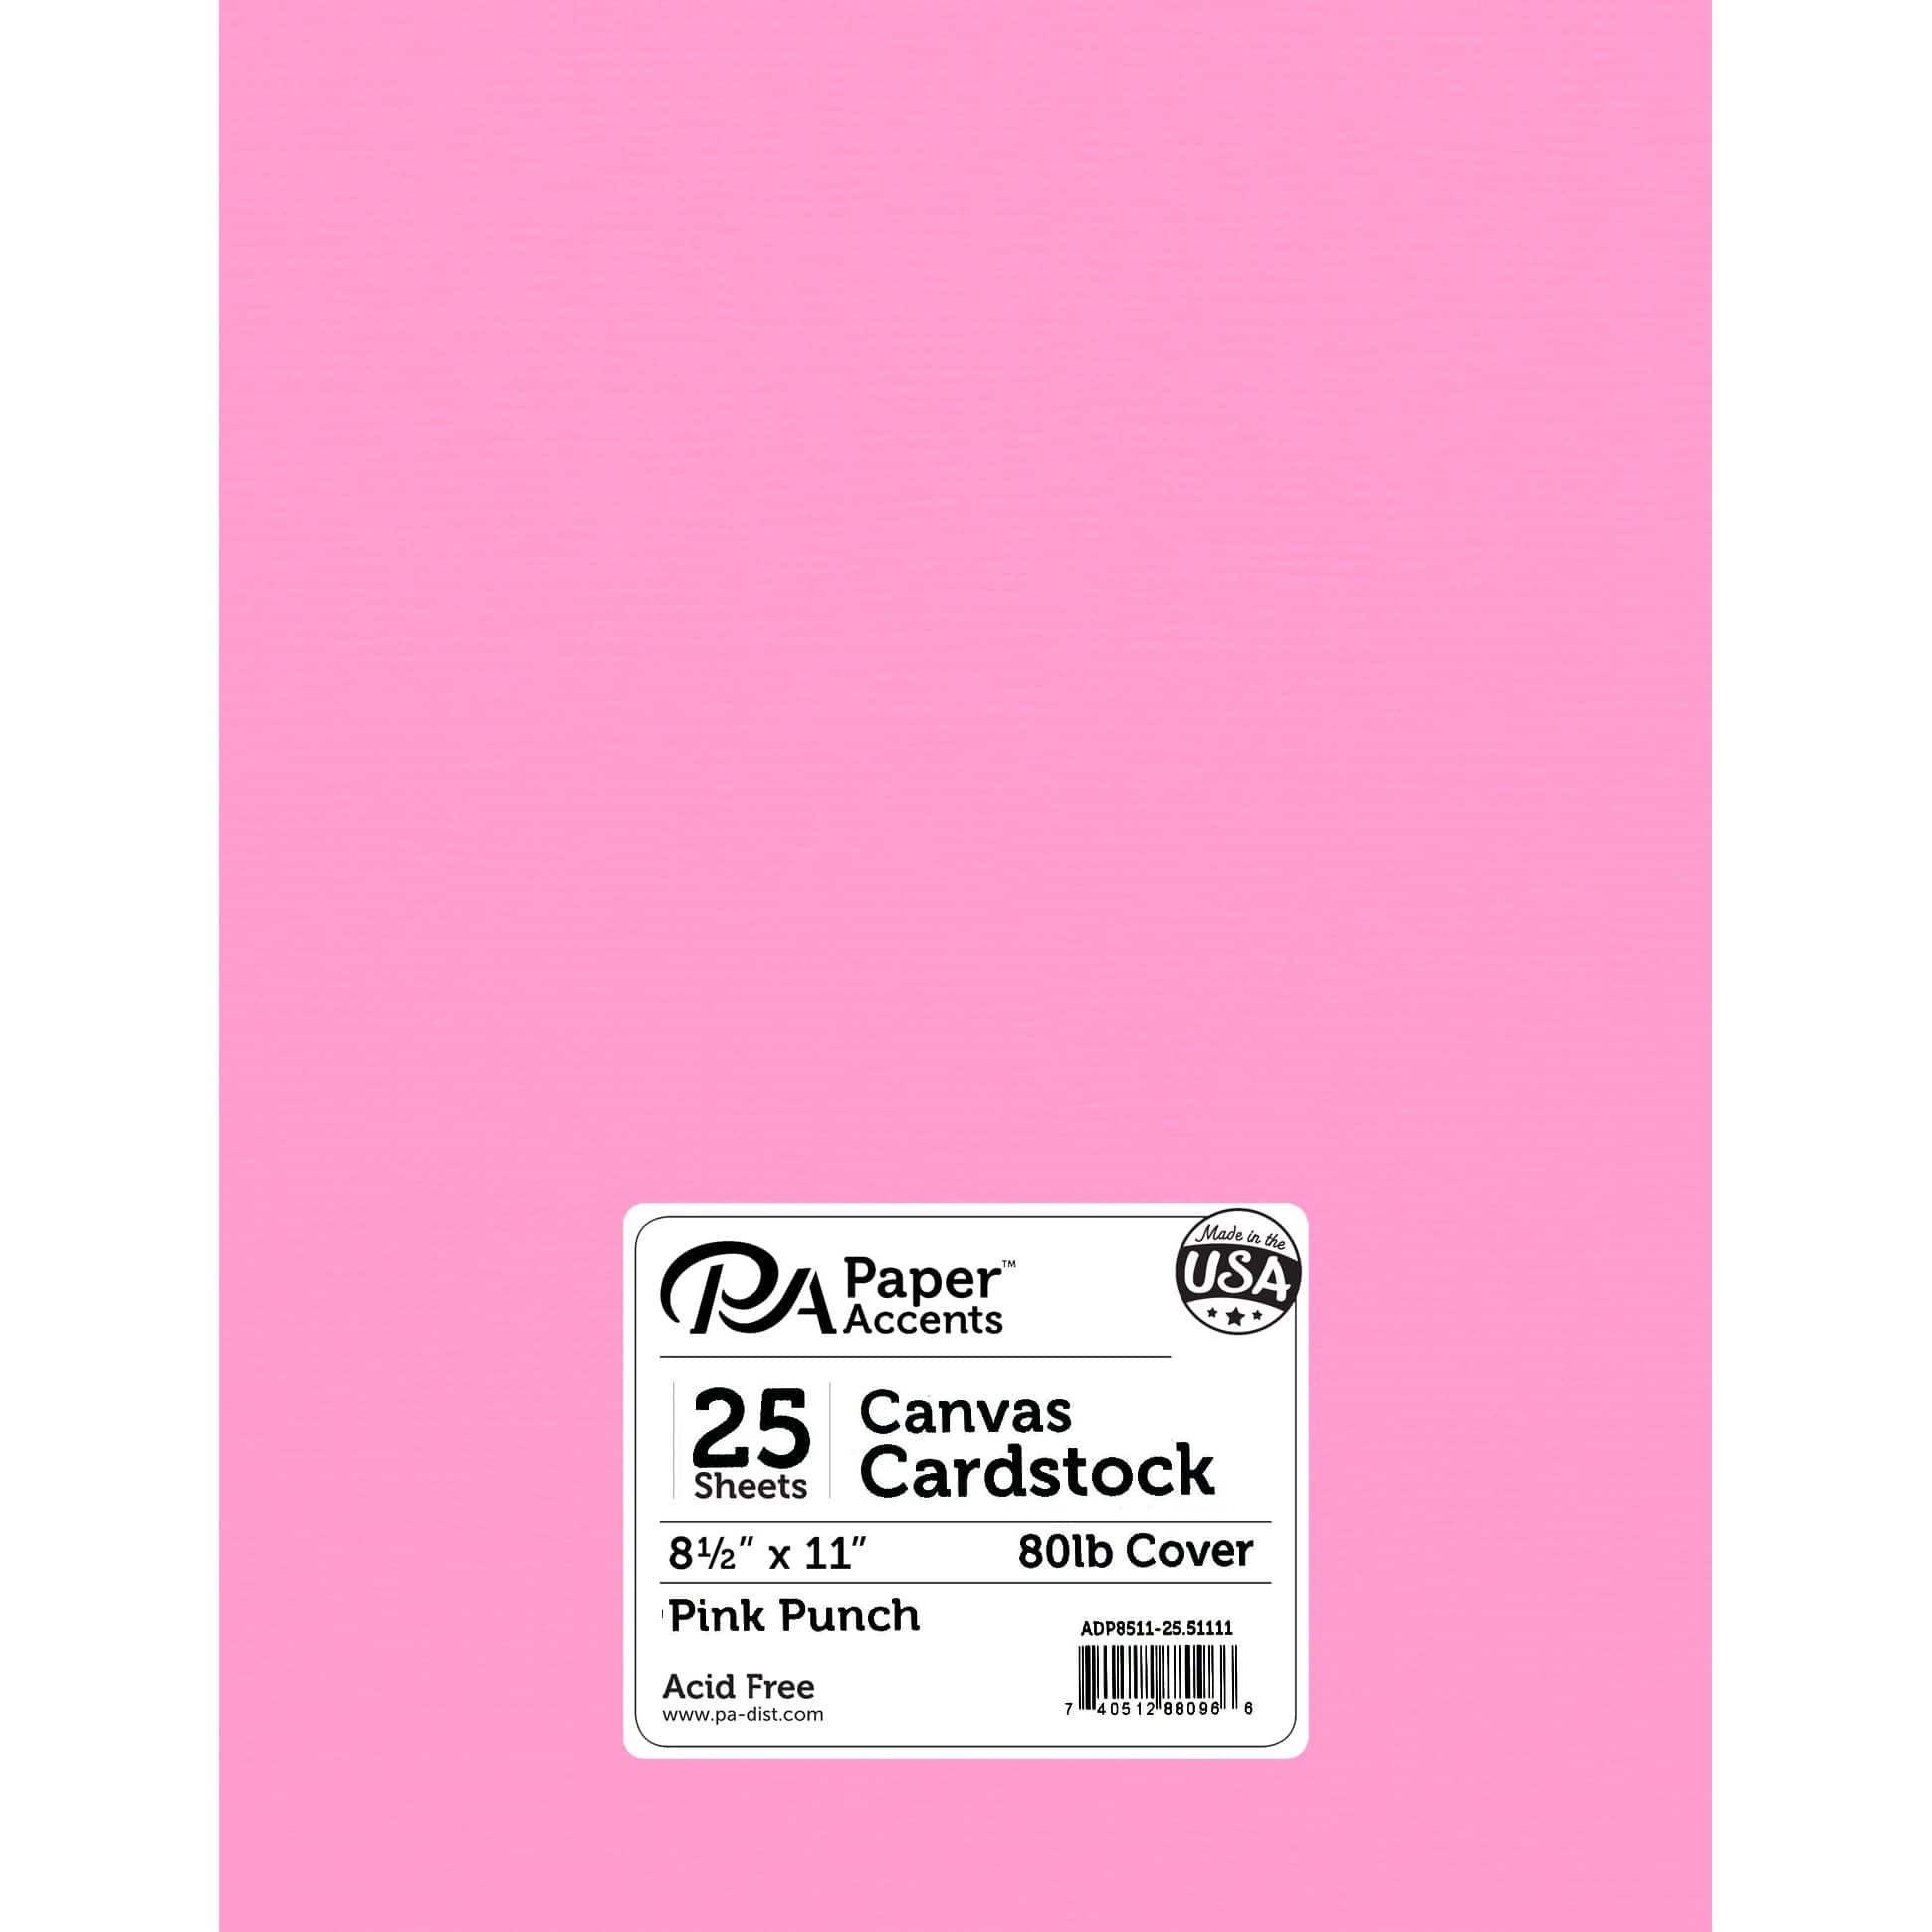 8.5 x 11 Paper - Fine Cardstock